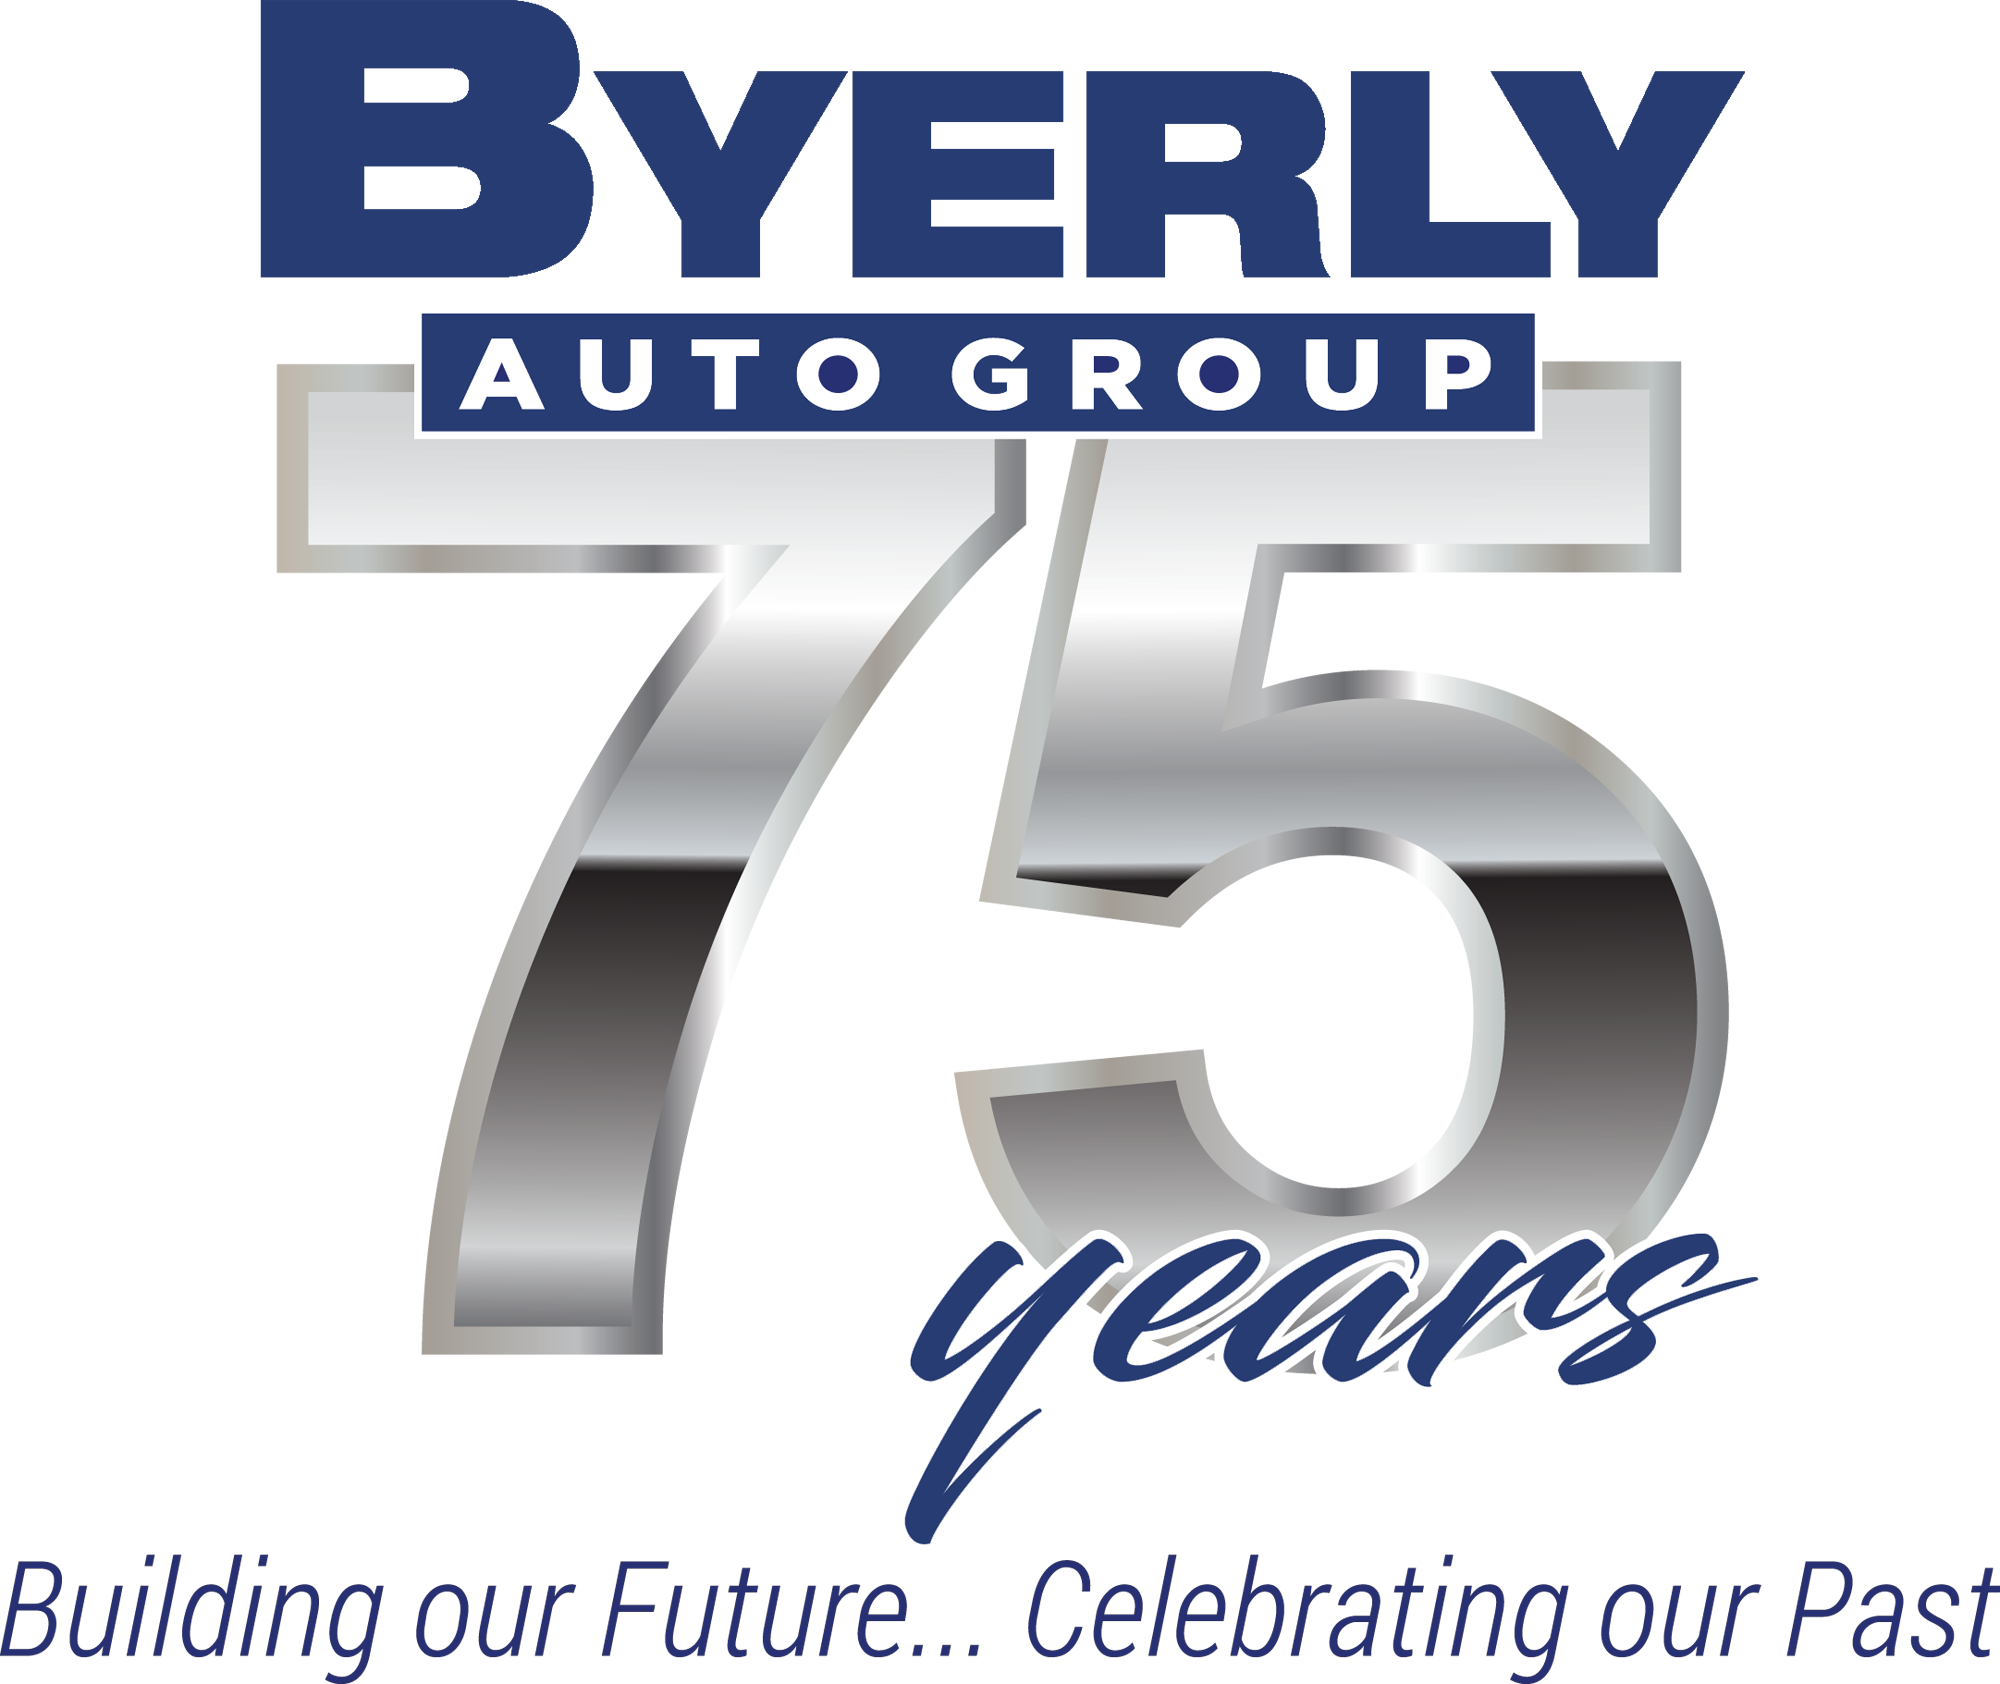 Byerly's 75th Anniversary